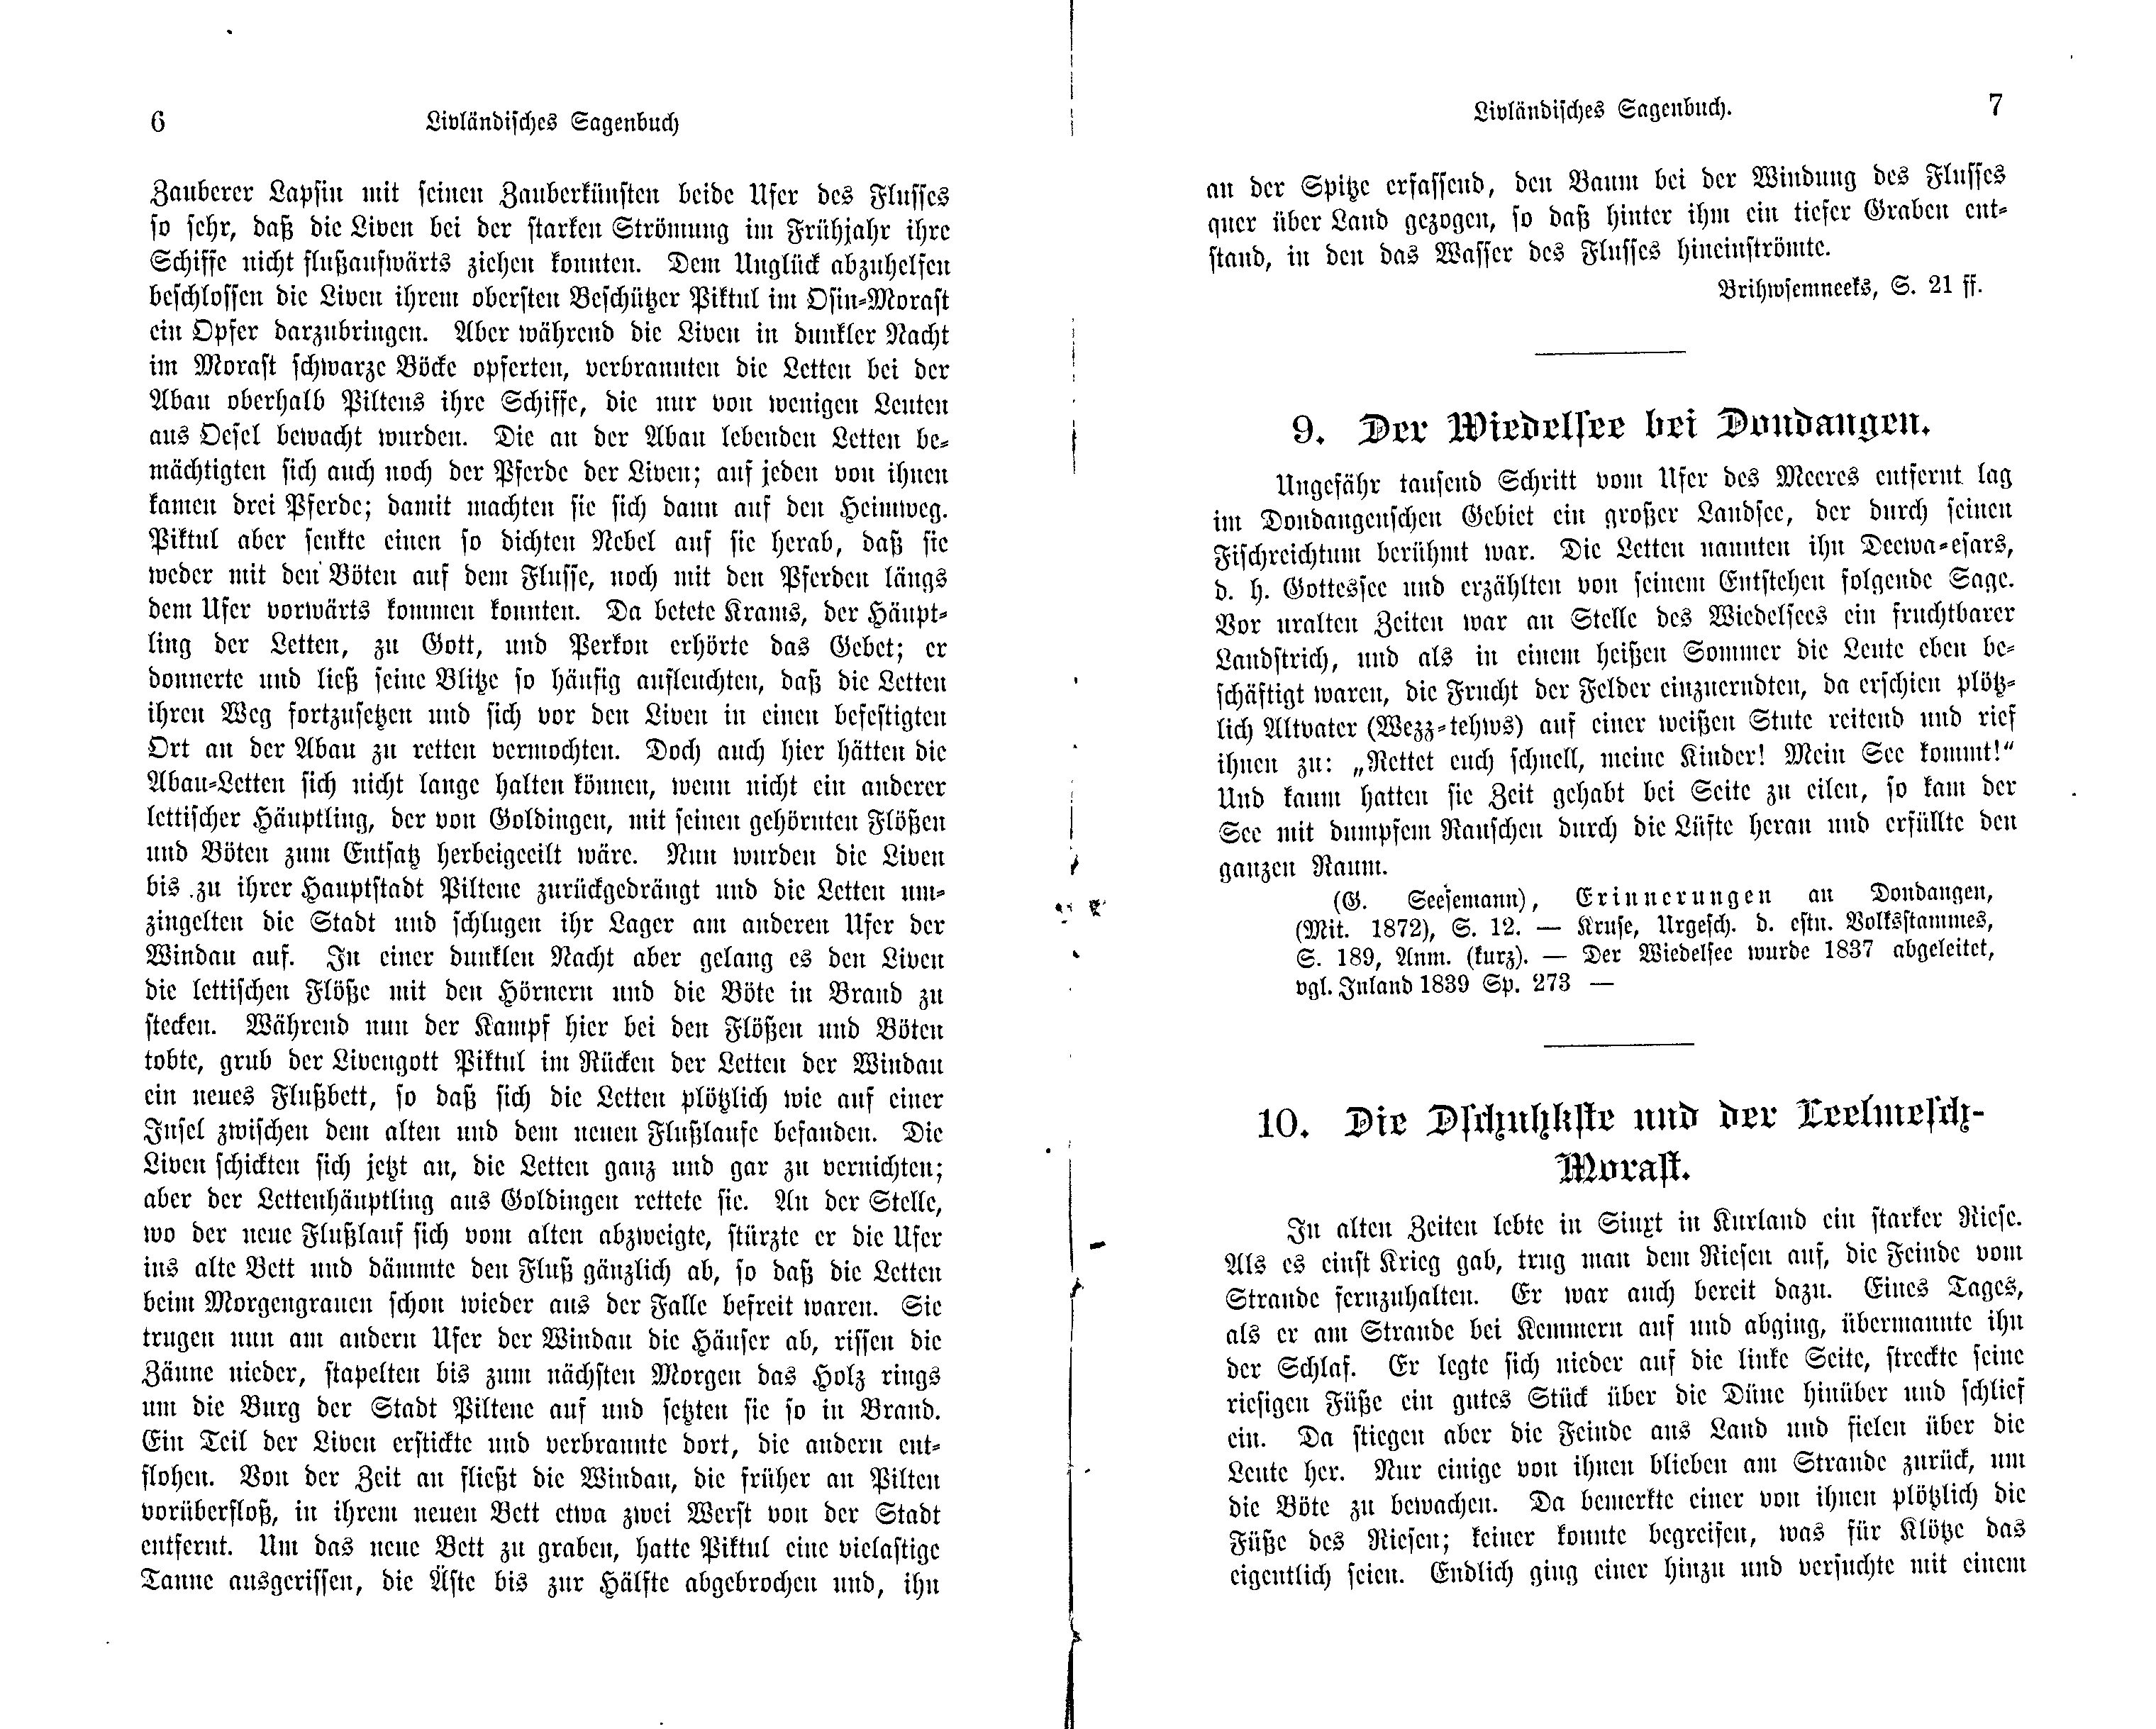 Der Wiedelsee bei Dondangen (1897) | 1. (6-7) Основной текст